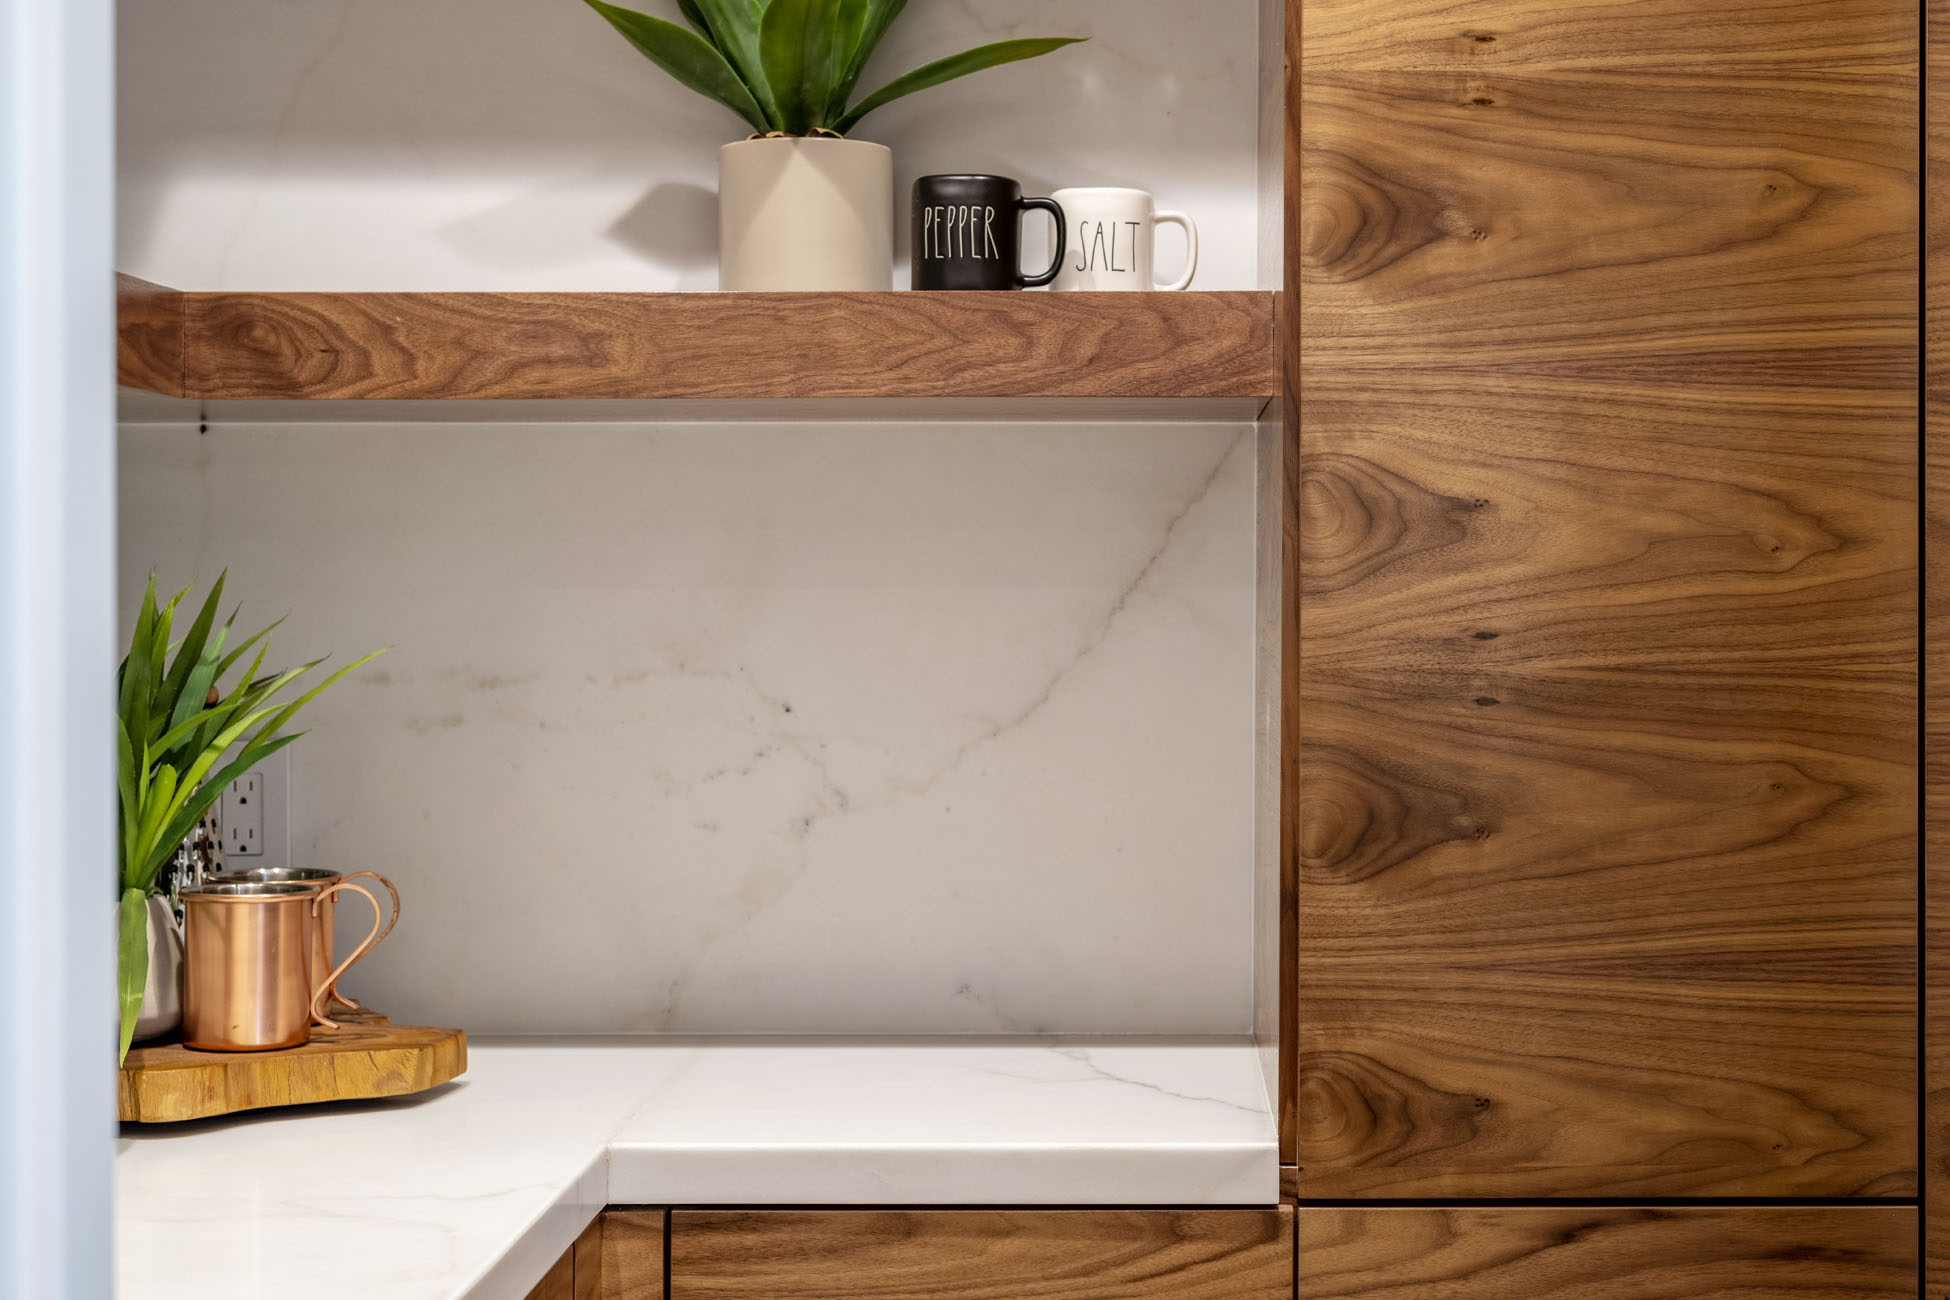 Beautiful custom kitchen cabinets with marble island